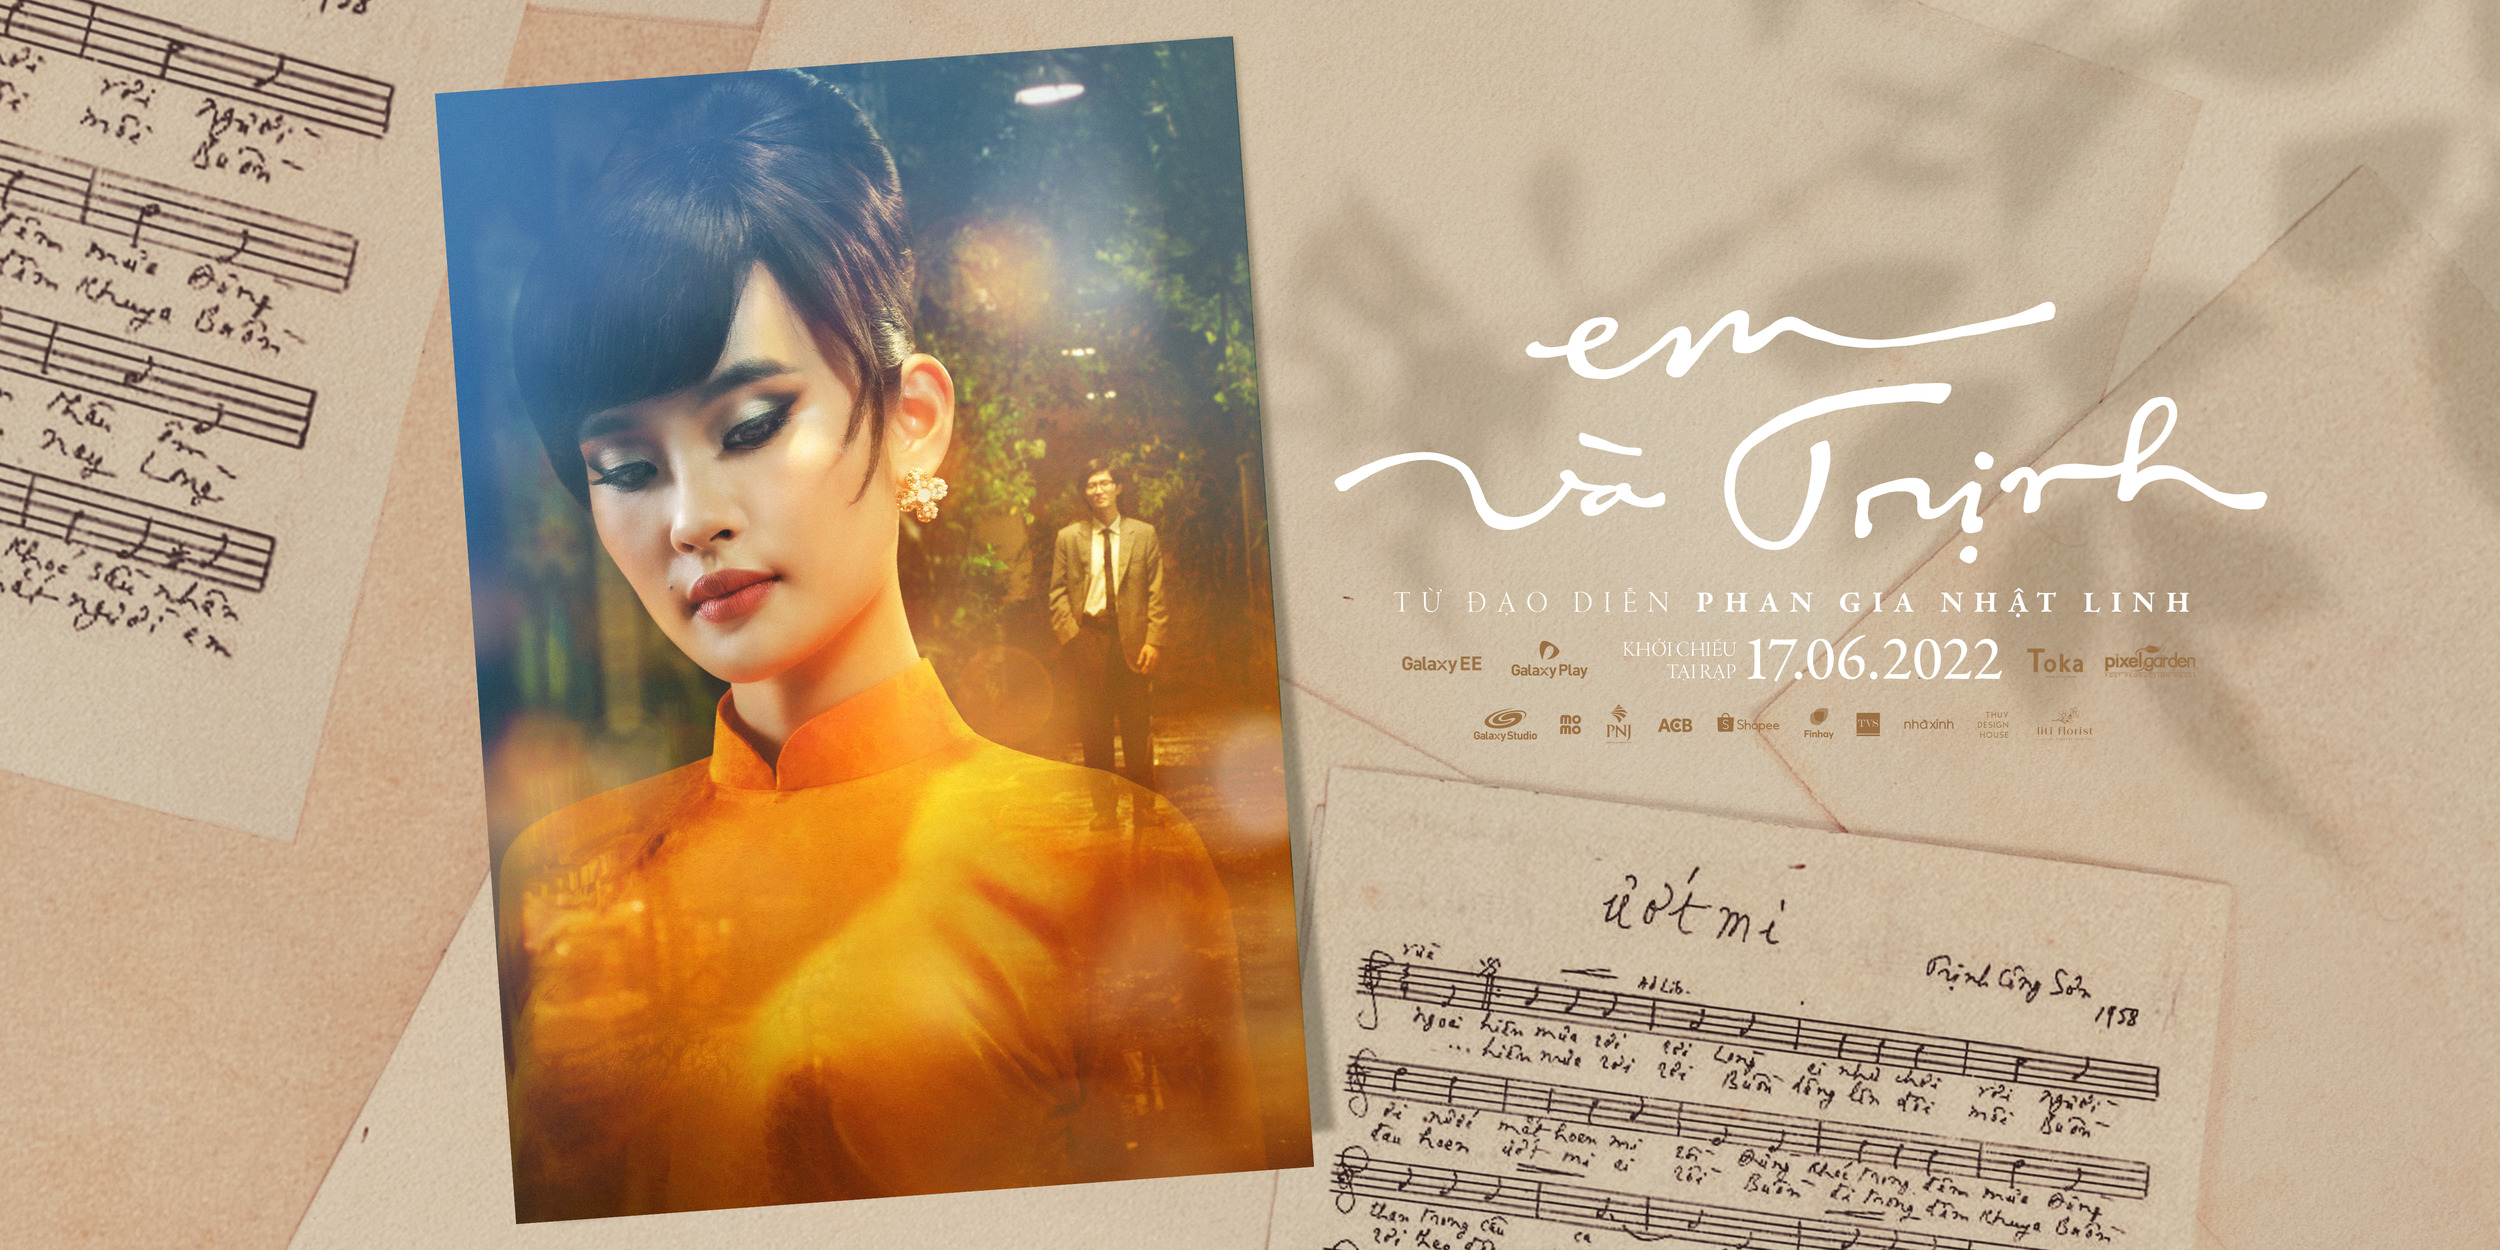 Mega Sized Movie Poster Image for Em Va Trinh (#19 of 19)